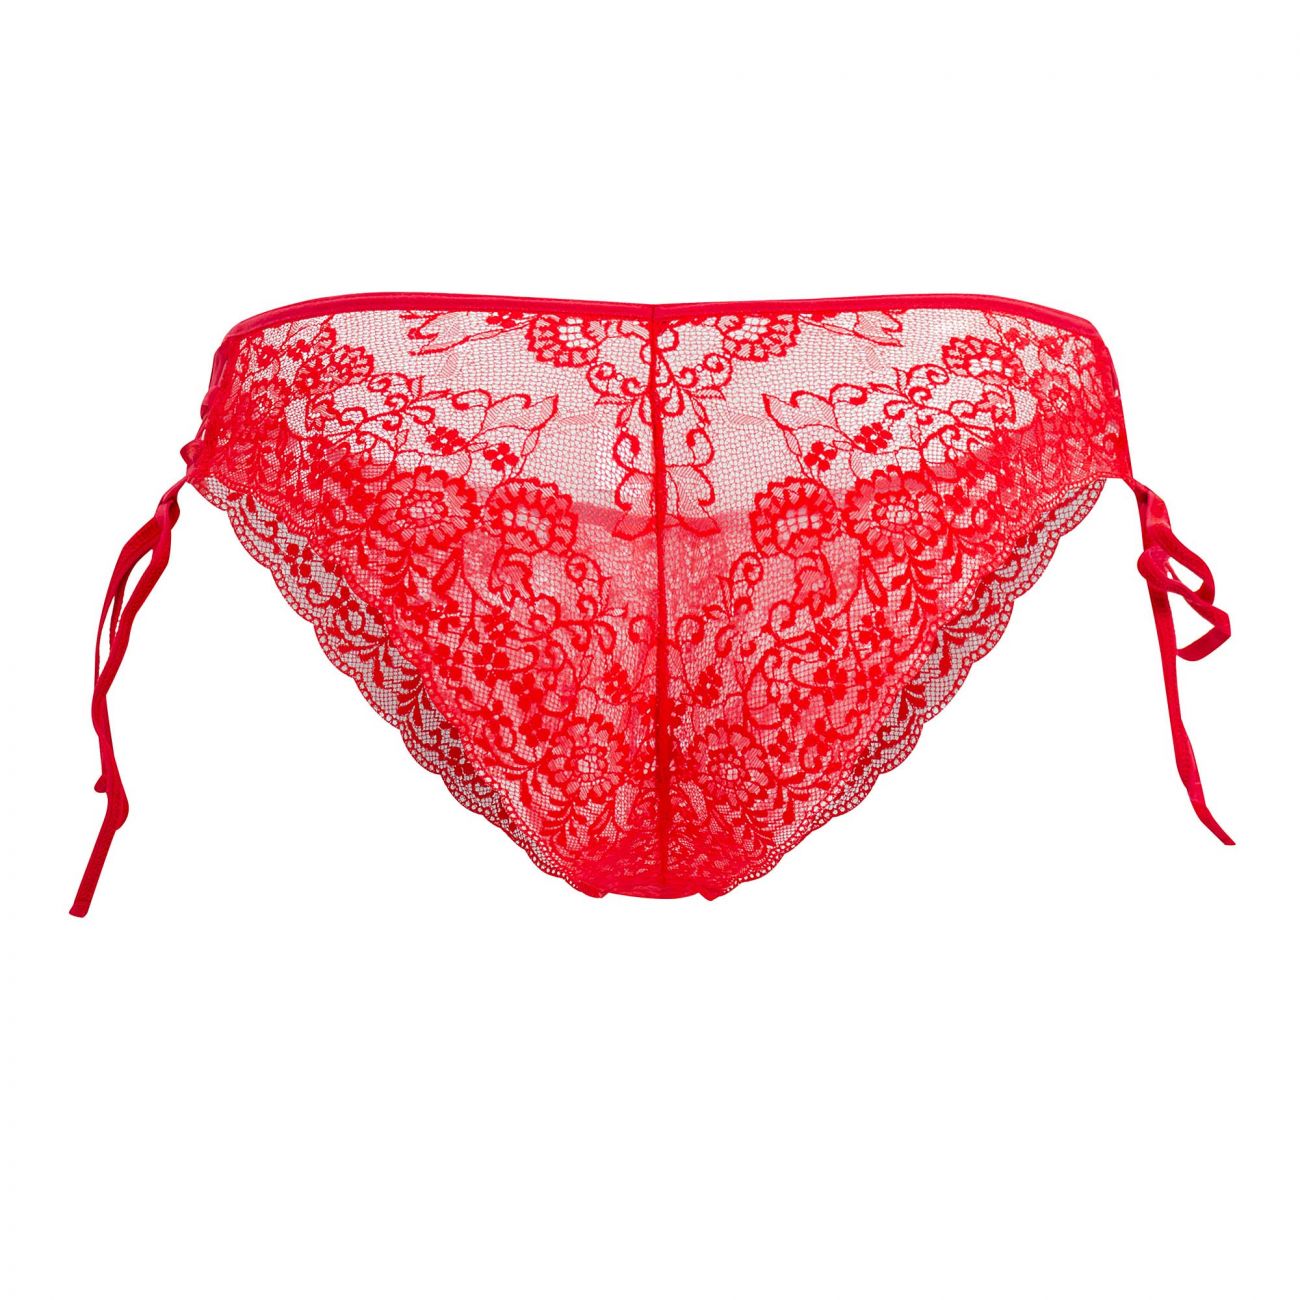 JCSTK - CandyMan 99488 Side Tie Lace Bikini Red